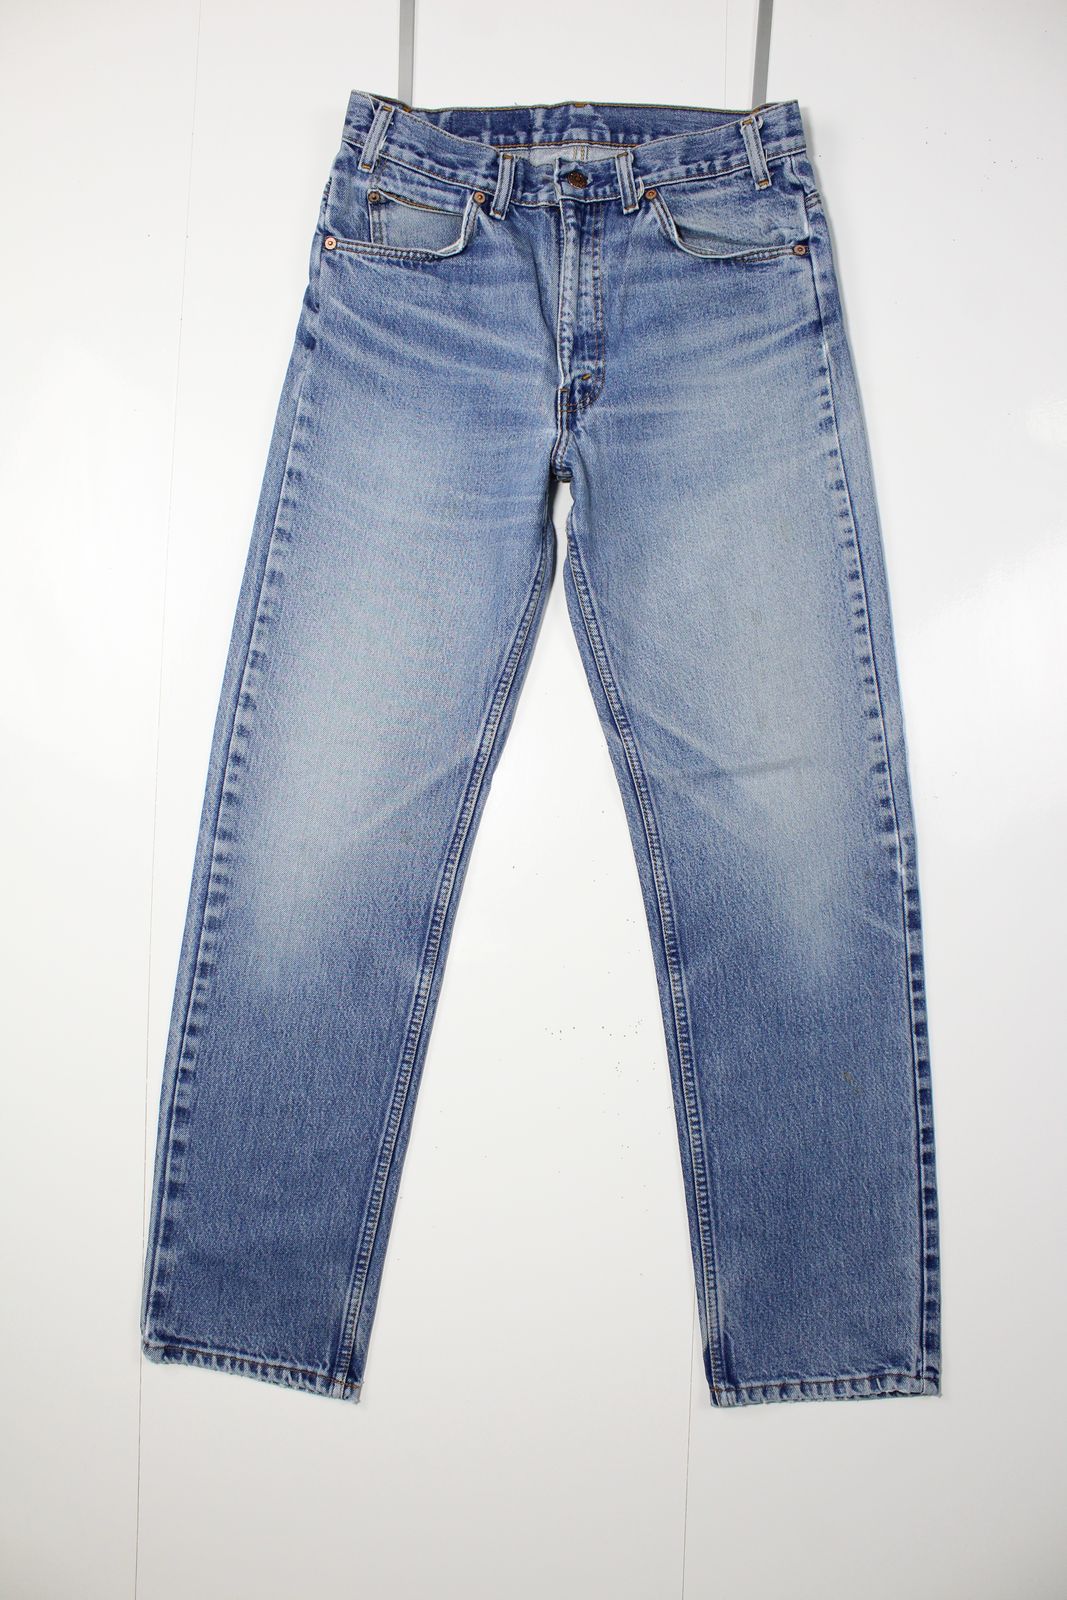 Levi's 505 Orange Tab Denim W32 L32 Made In USA Jeans Vintage